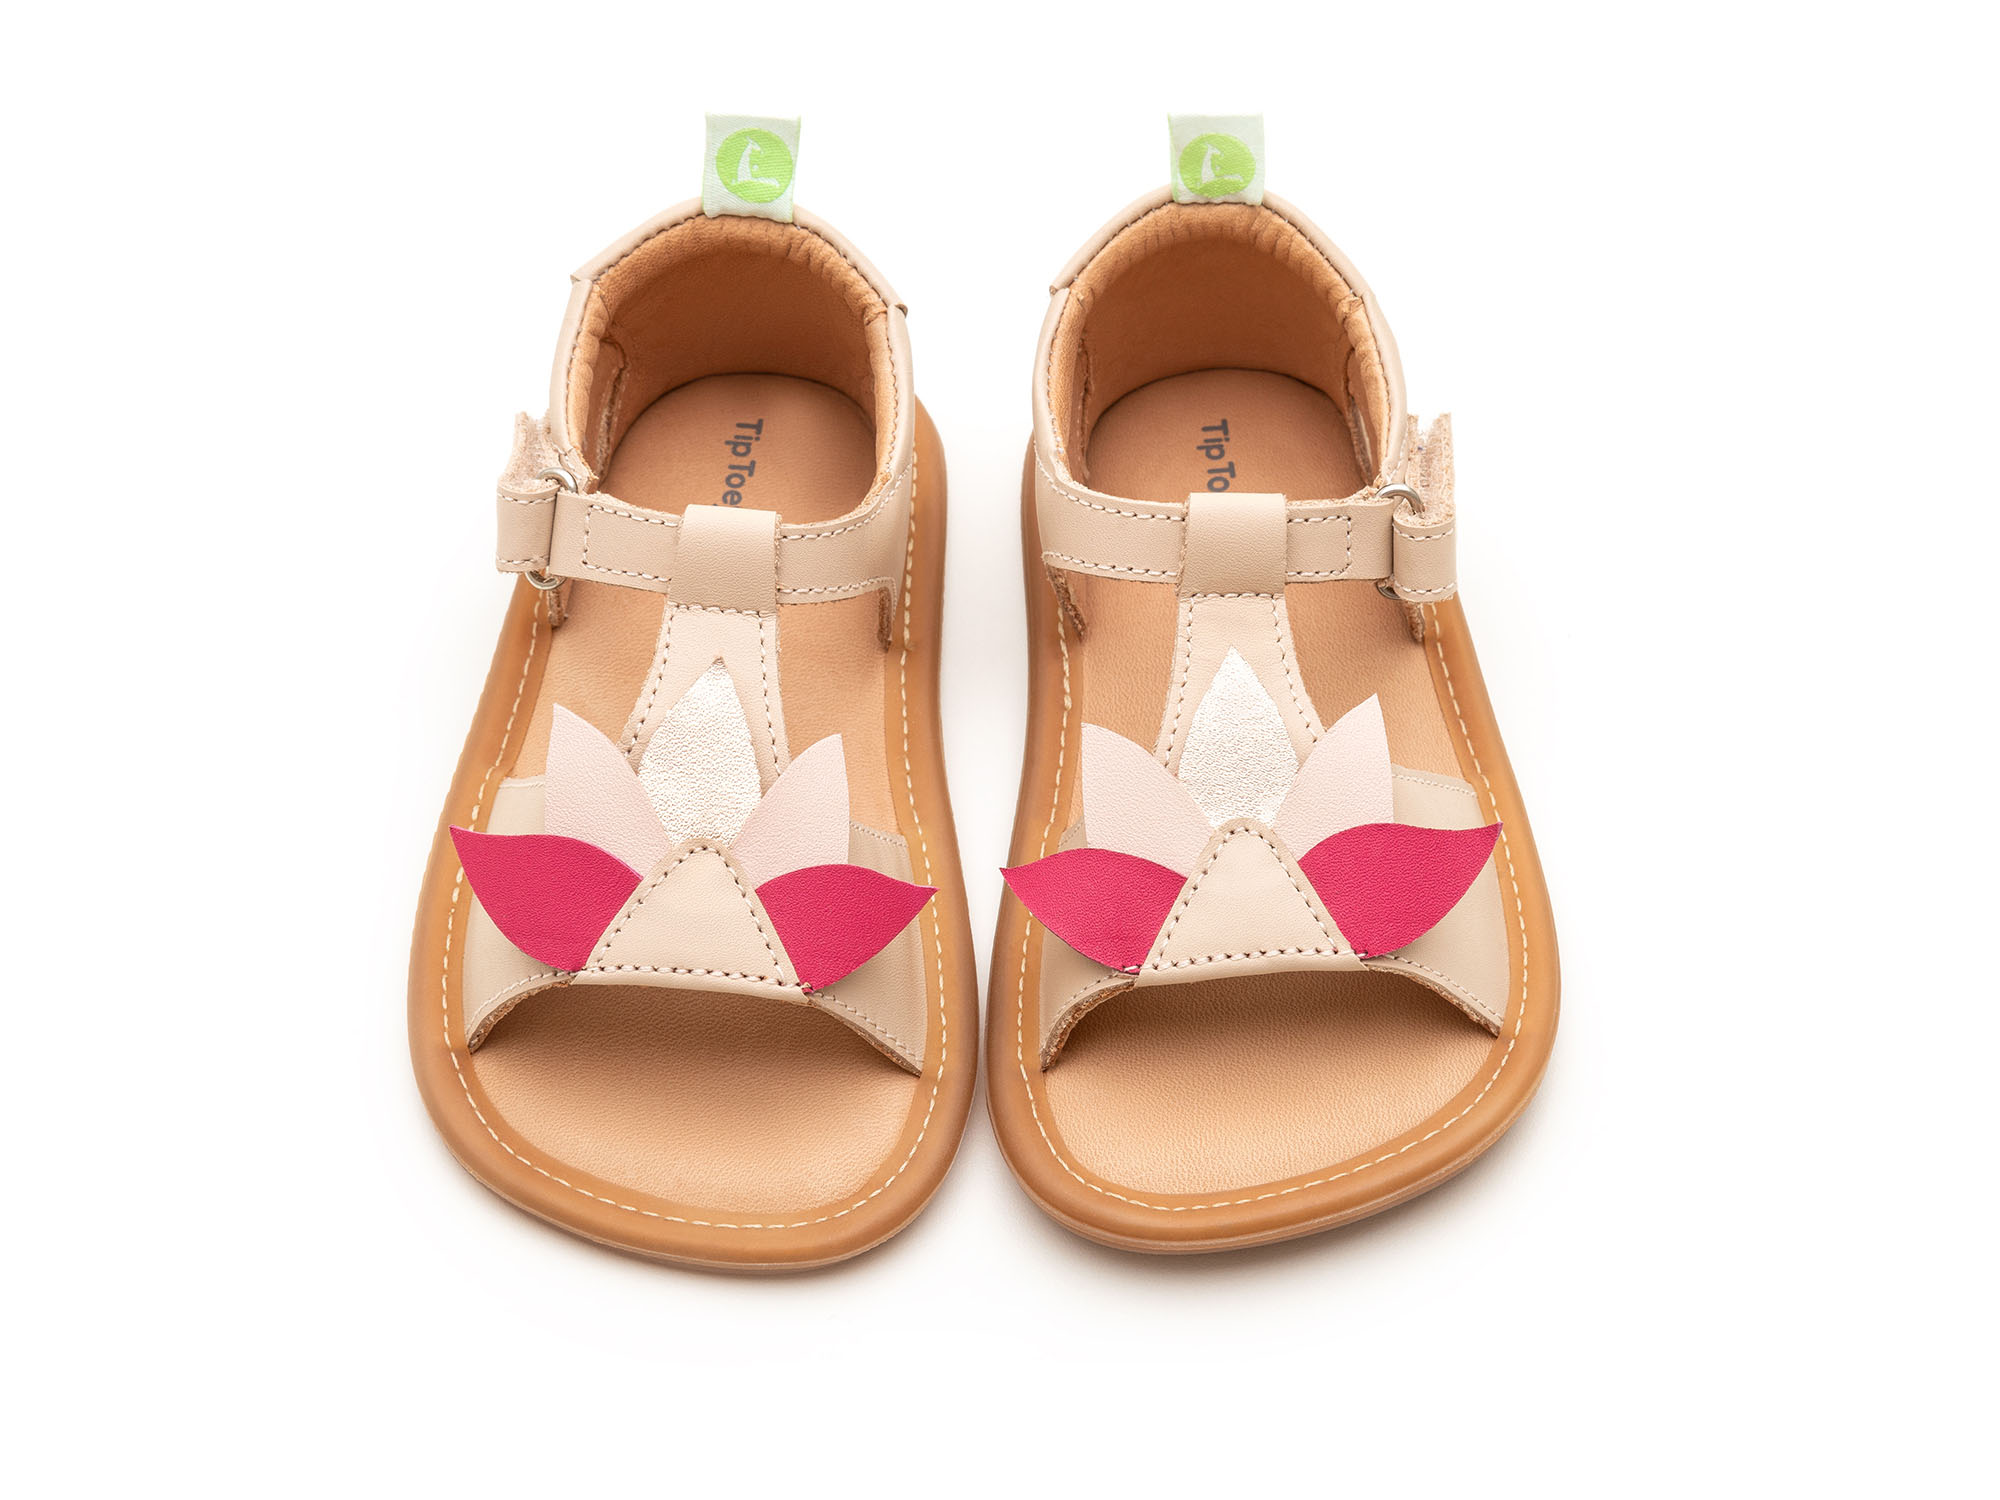 UP & GO Sandals for Girls Vicky | Tip Toey Joey - Australia - 5